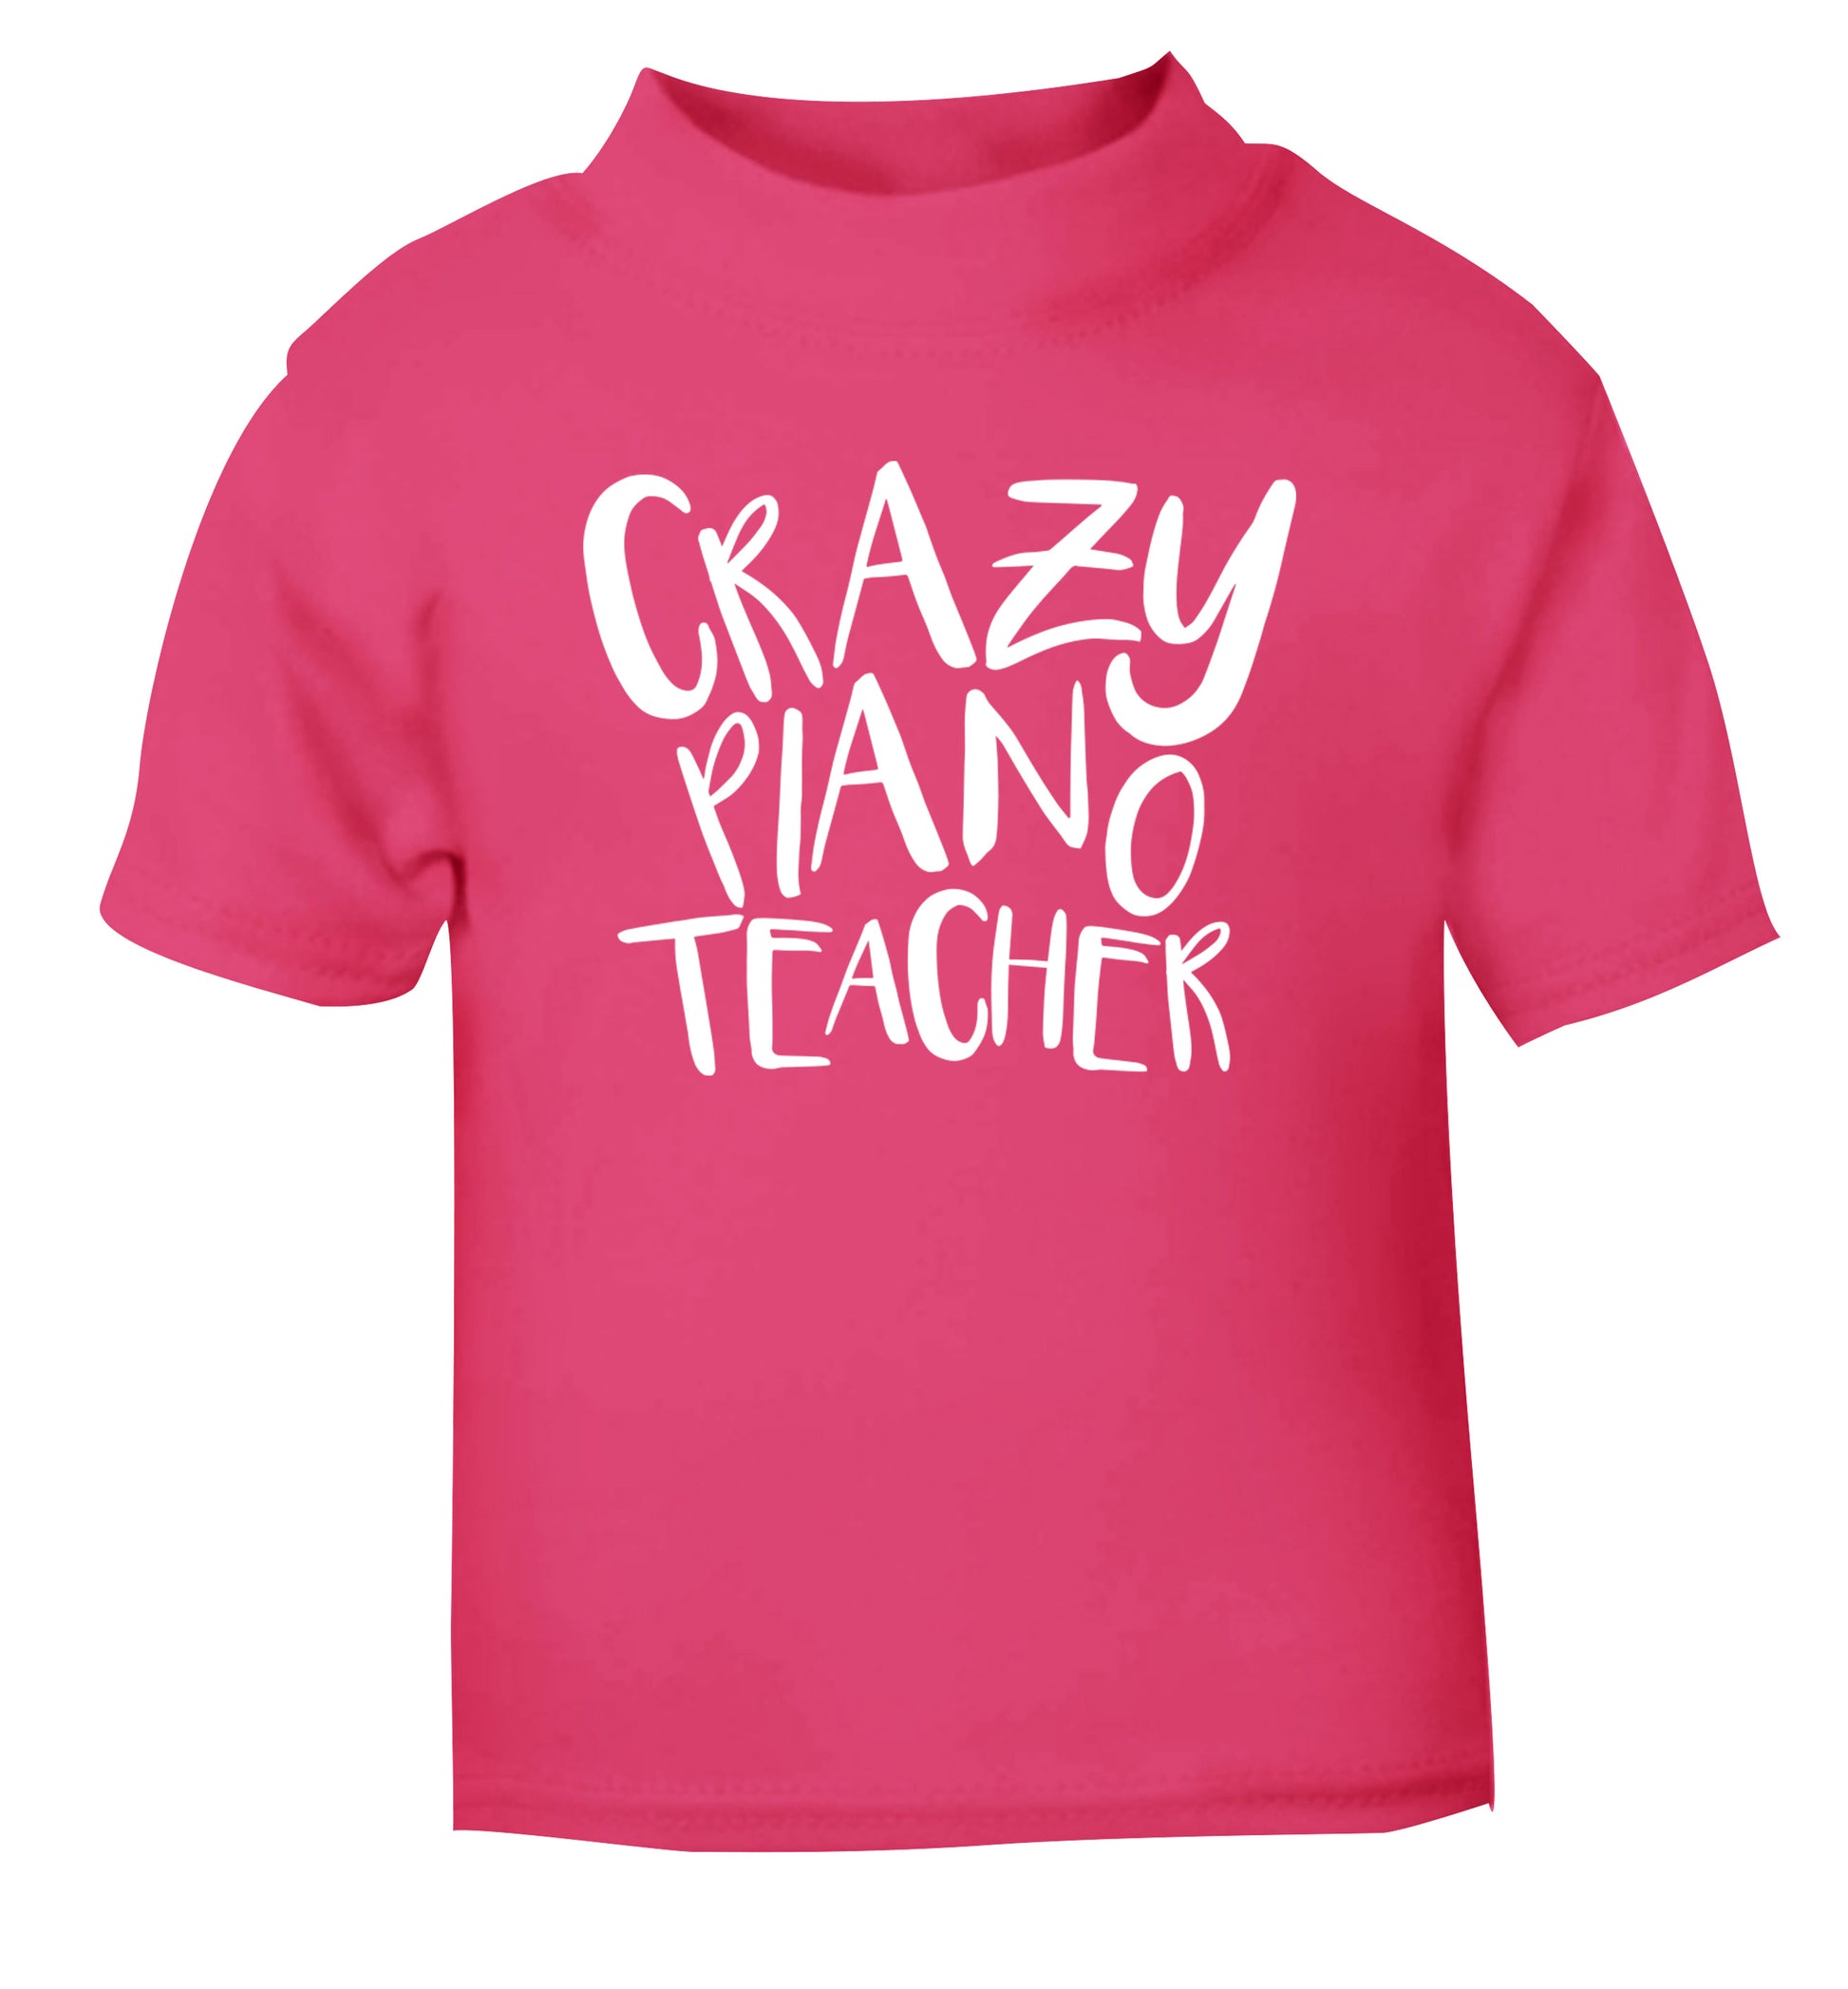 Crazy piano teacher pink Baby Toddler Tshirt 2 Years